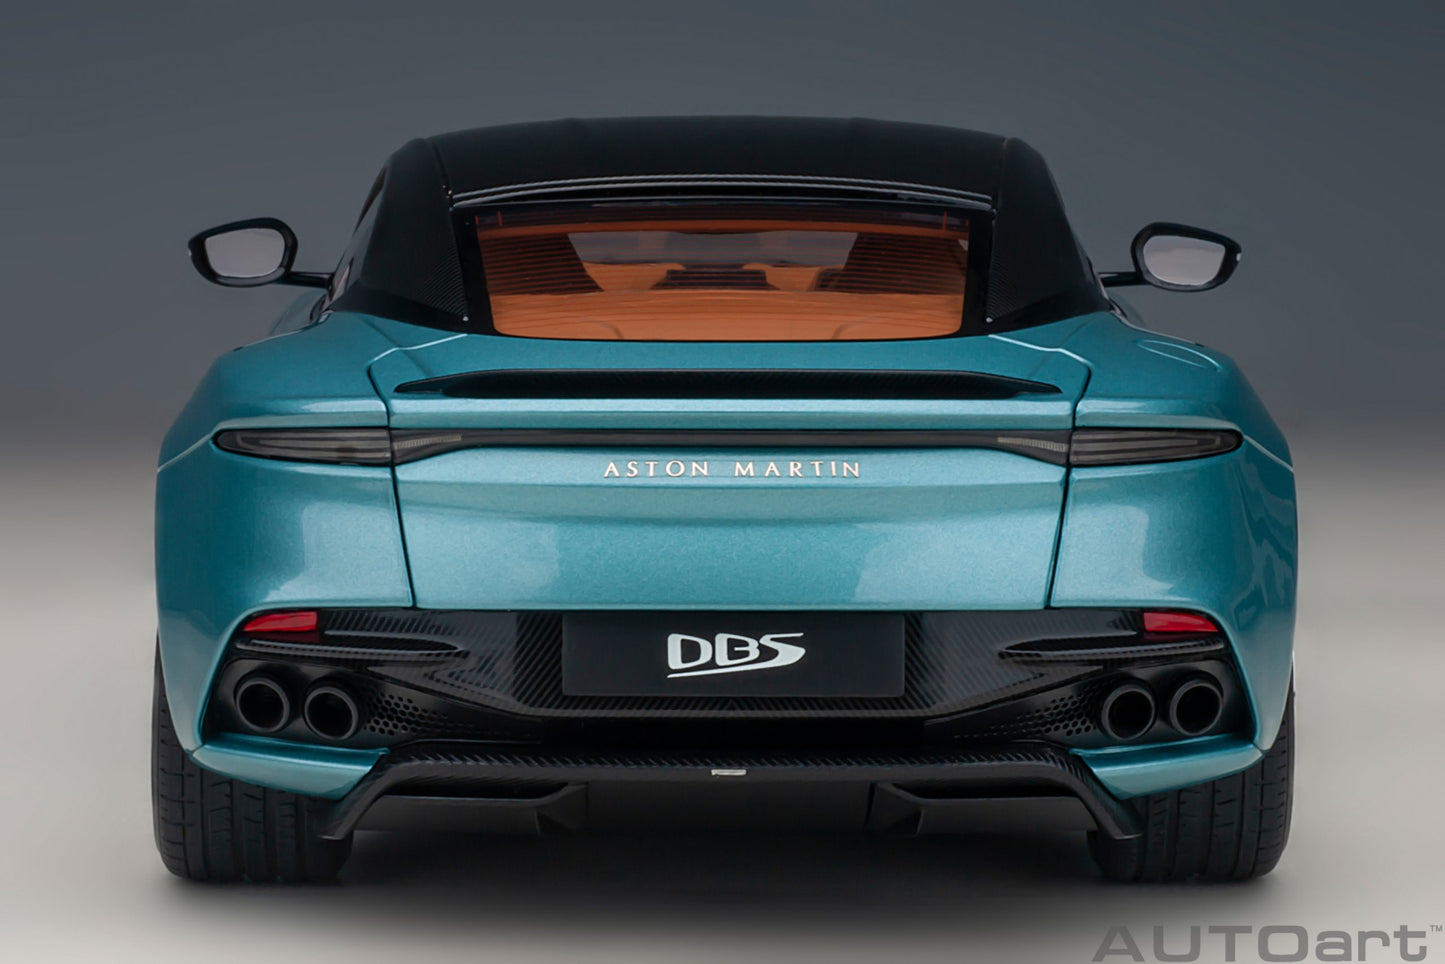 AUTOart 1:18 Aston Martin DBS Superleggera (Caribbean Pearl Blue) 70299